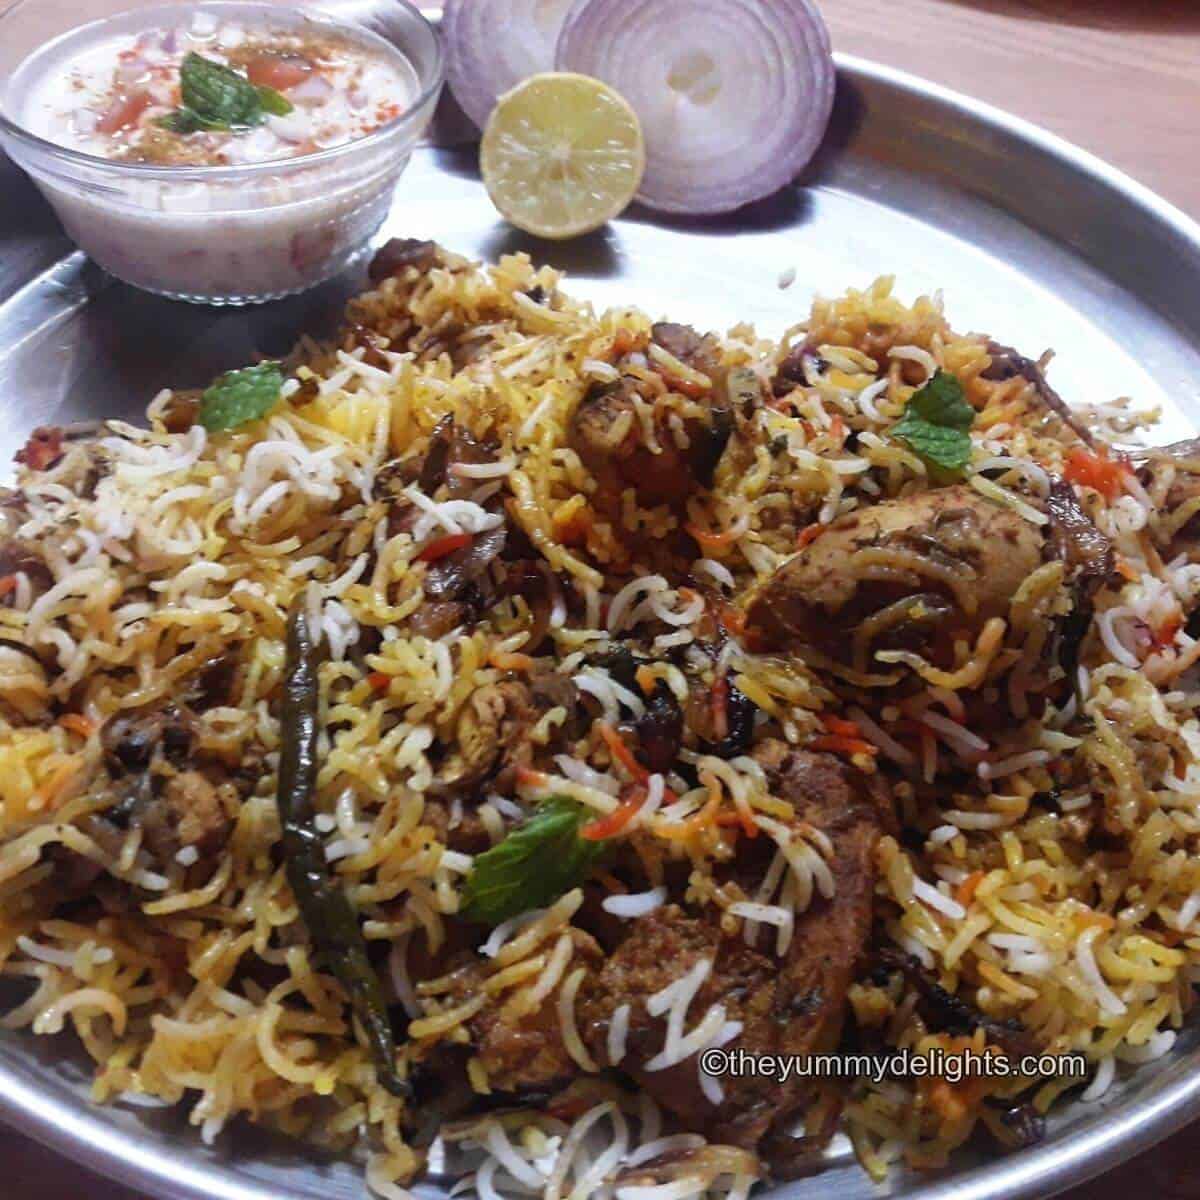 Hyderabadi biryani served with raita and onion slices.